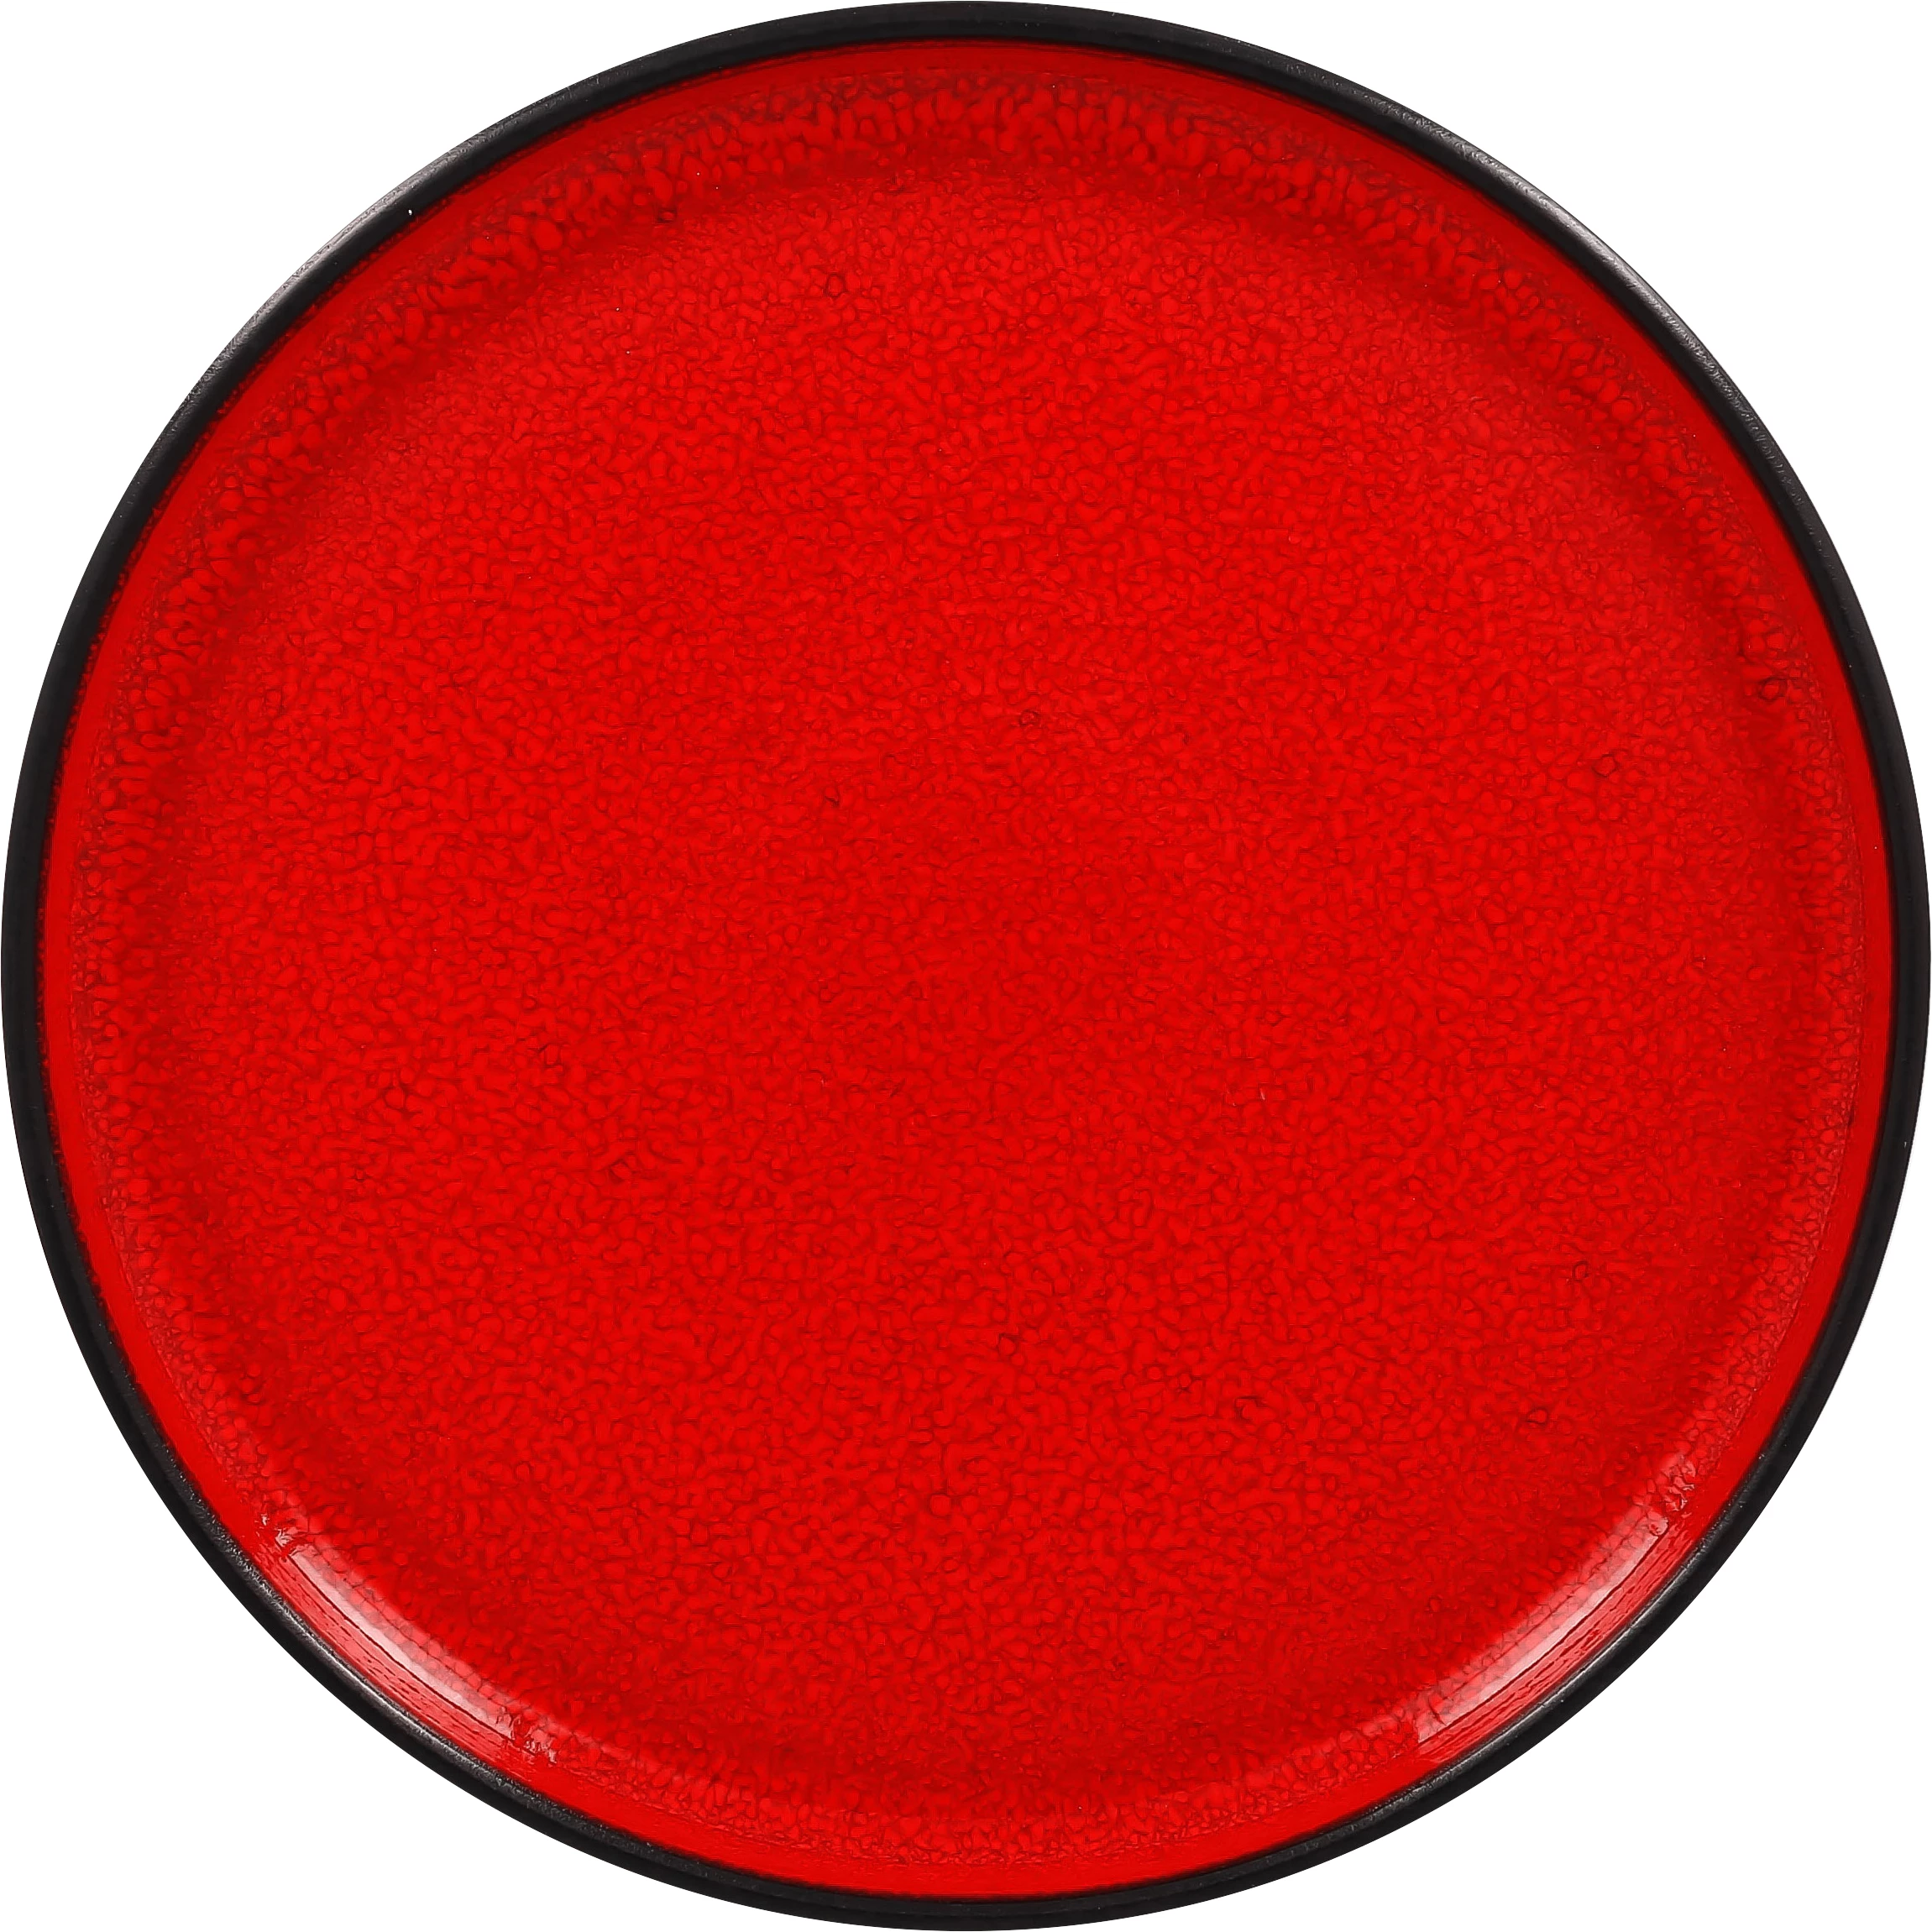 RAK Fire flad tallerken uden fane, rød, ø23 cm